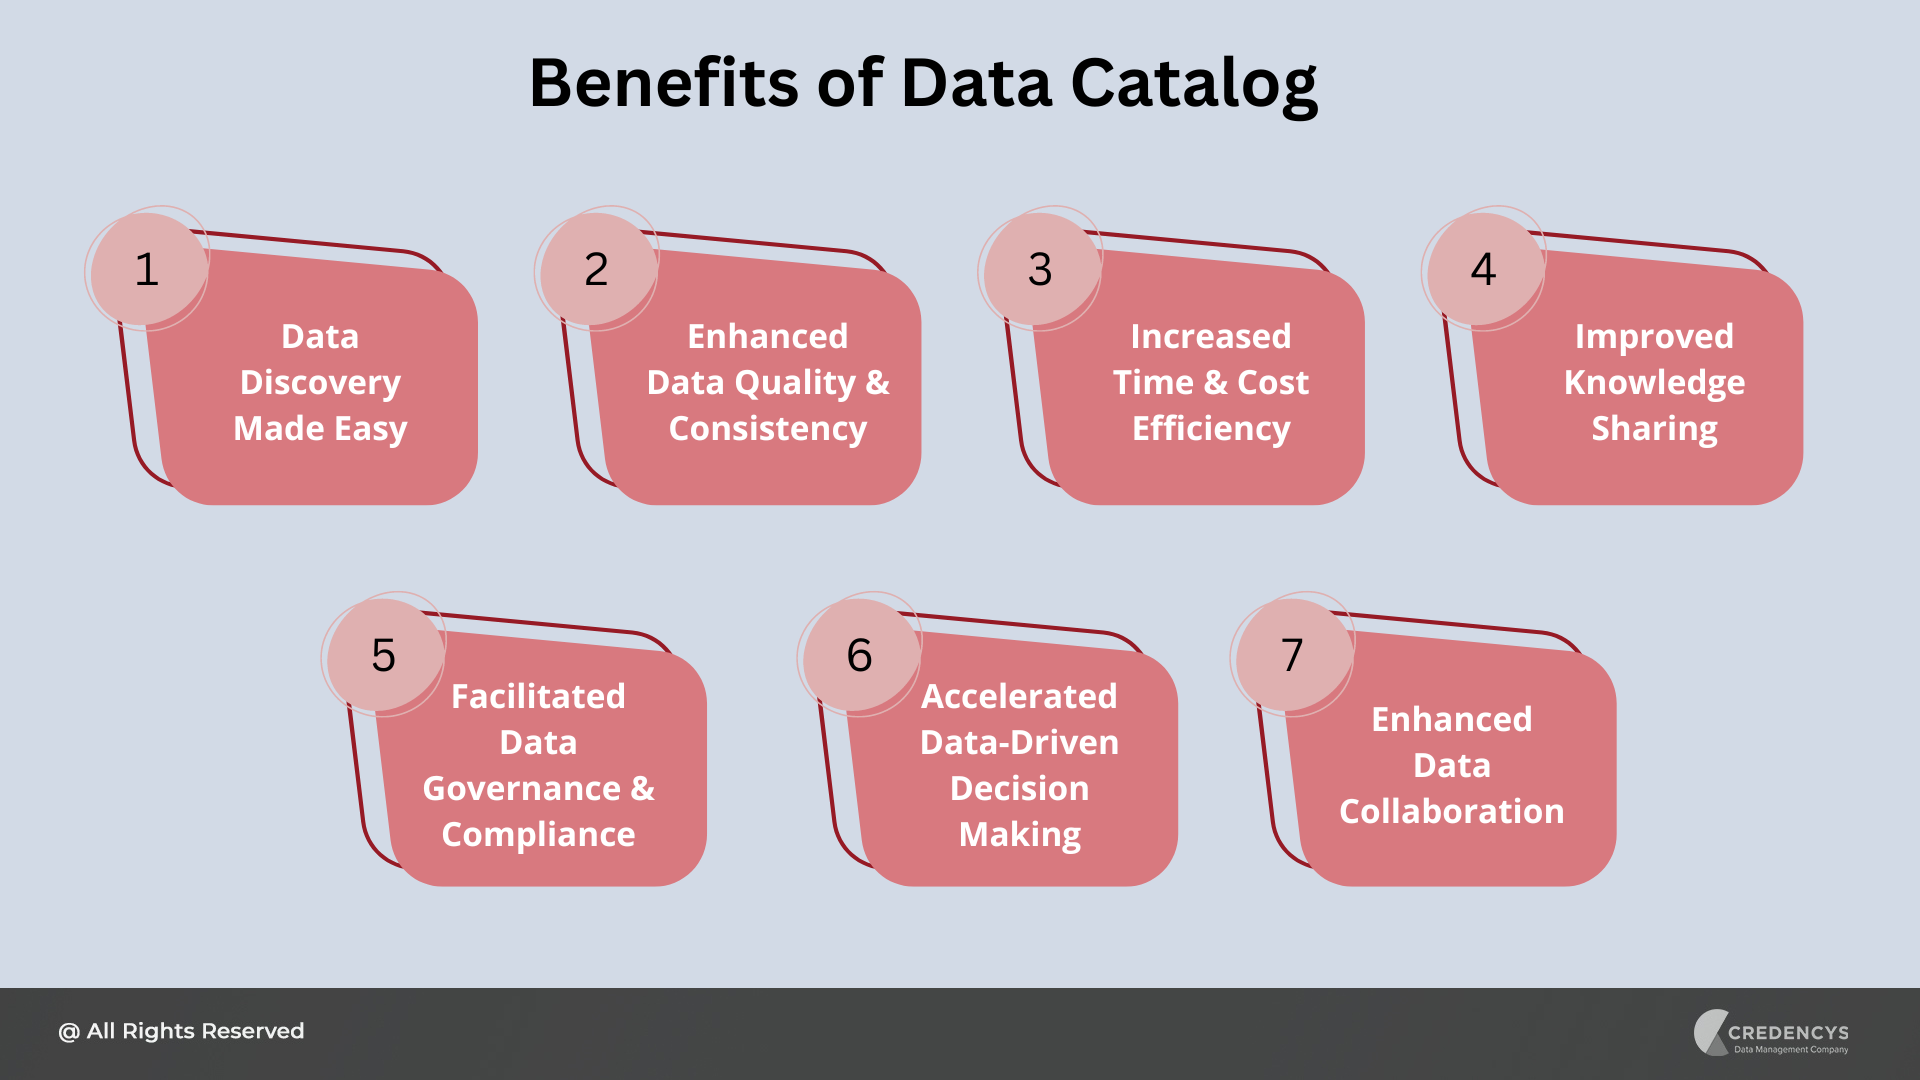 Benefits of Data Catalog